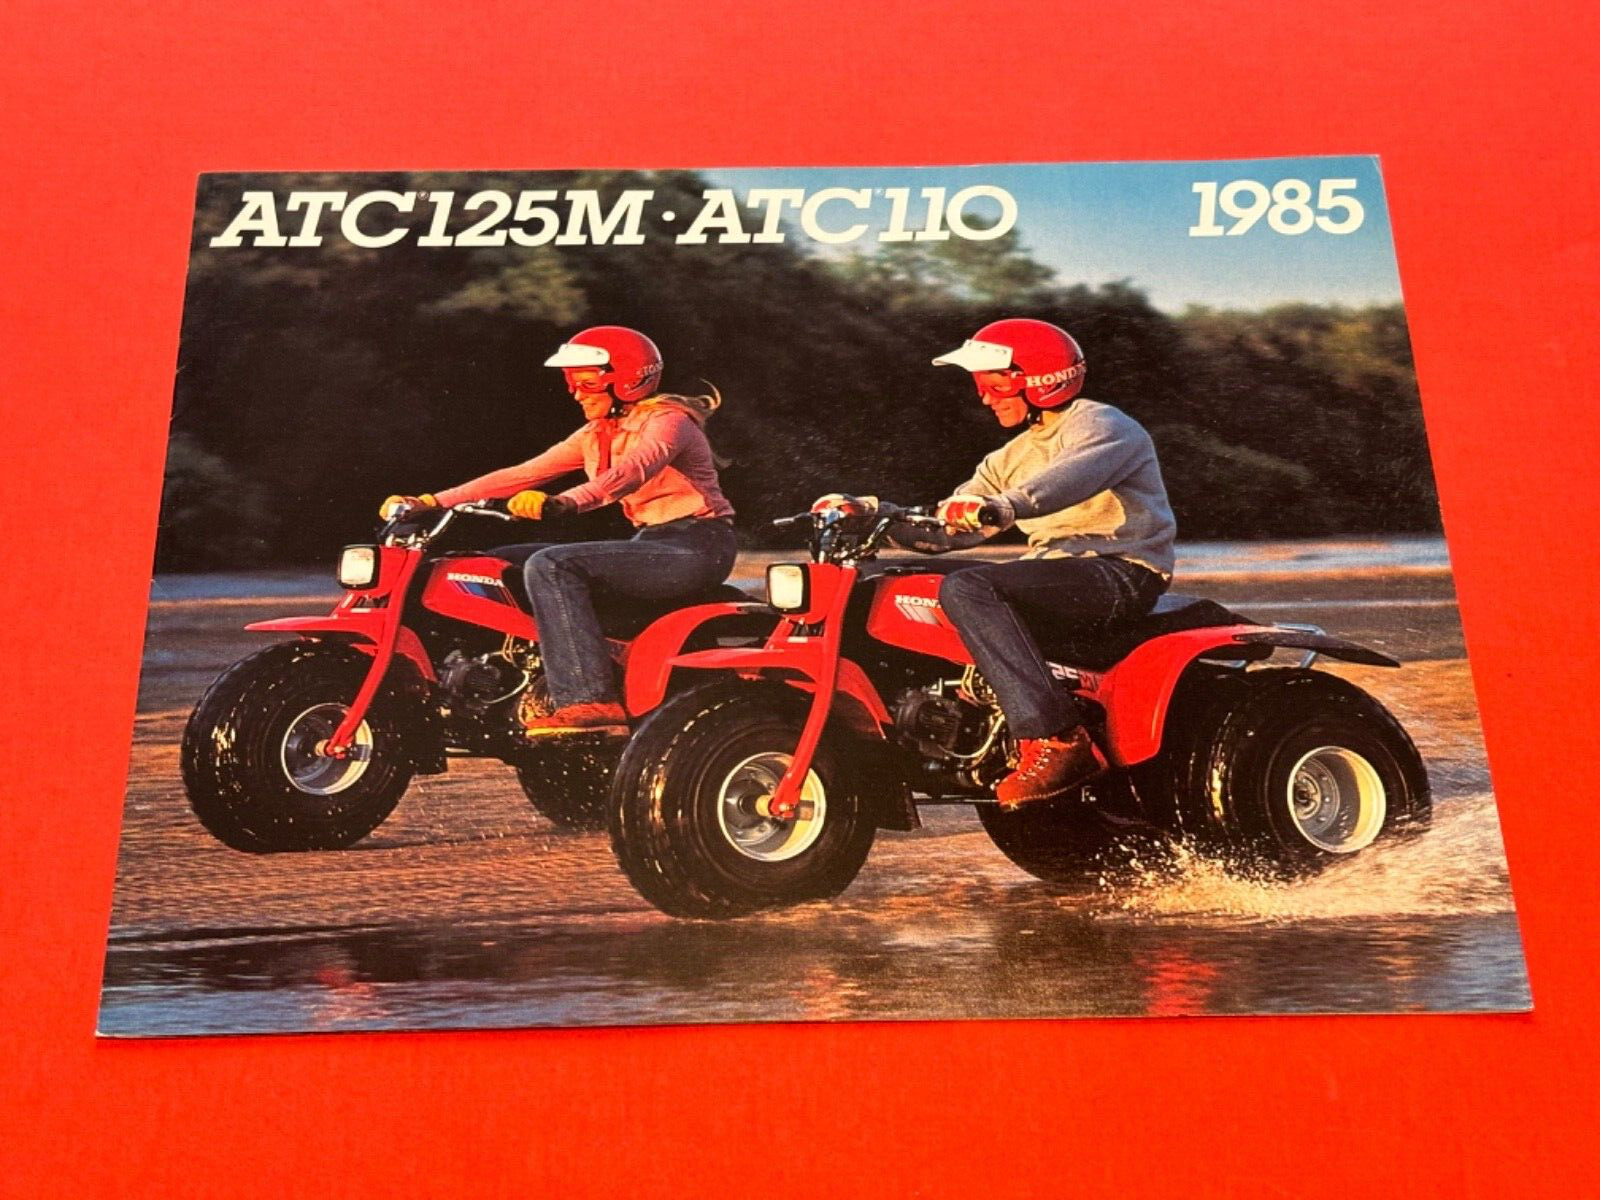 Original 1985 Honda ATC 125M-ATC 110 Dealer Sales Brochure